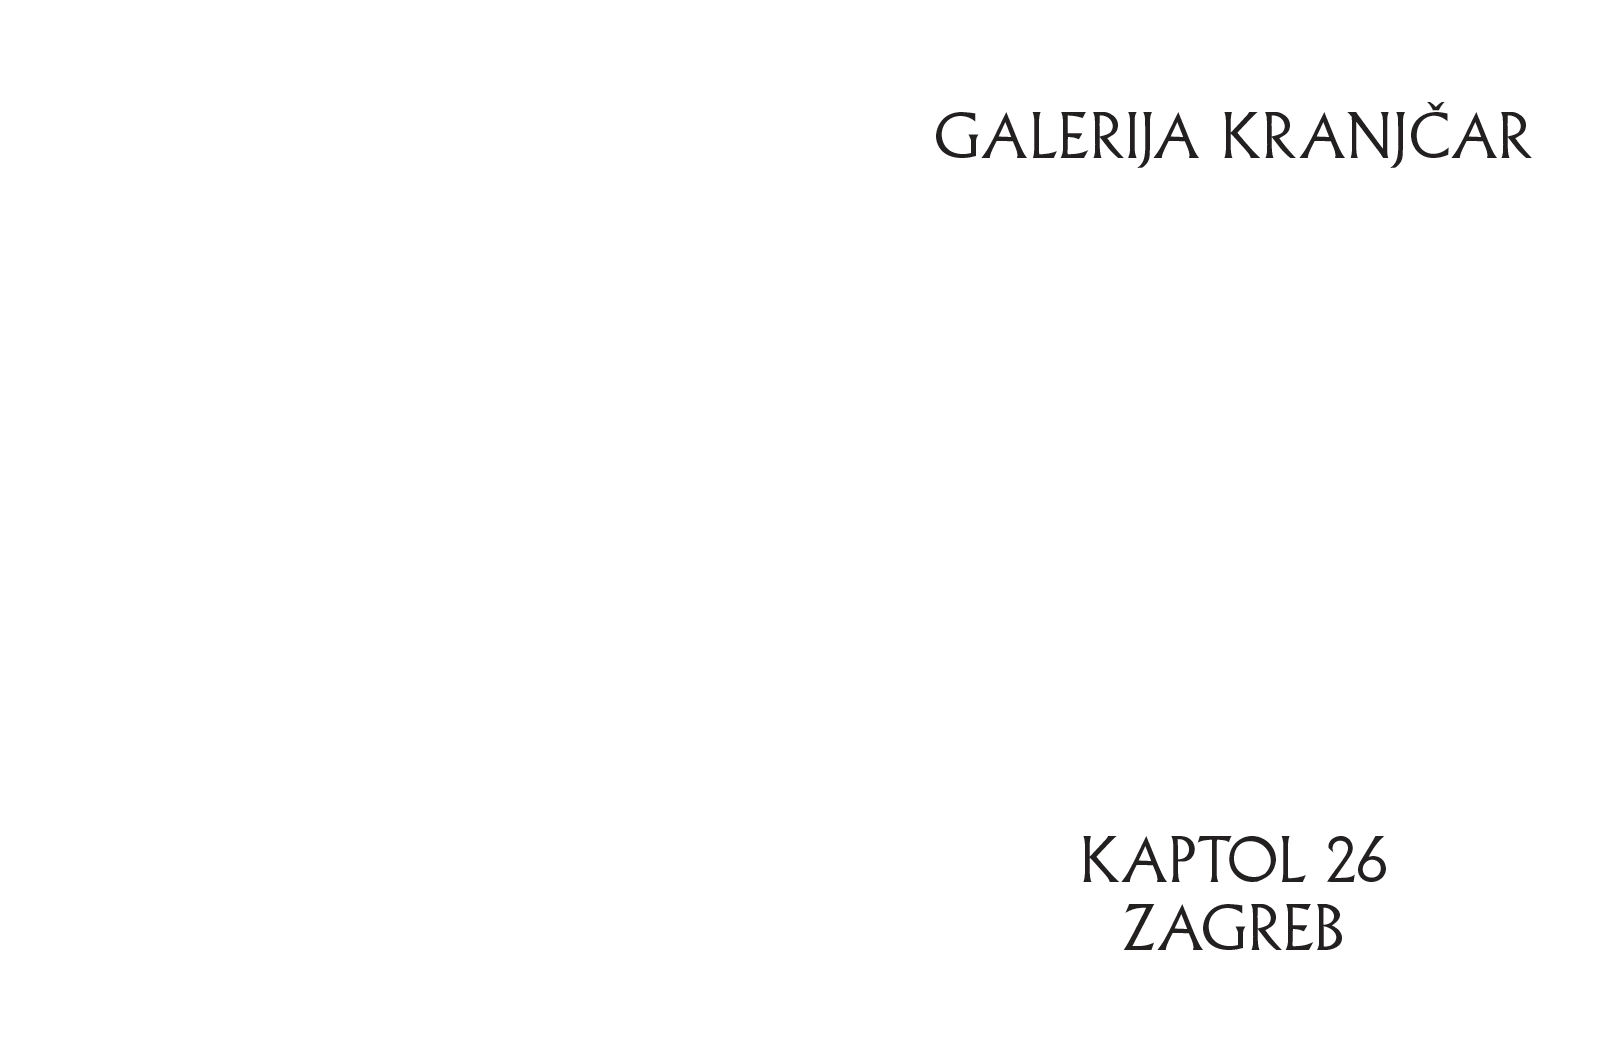 Brand identity and brochure designed by Bunch for Zagreb-based modern art gallery Galerija Kranjčar.